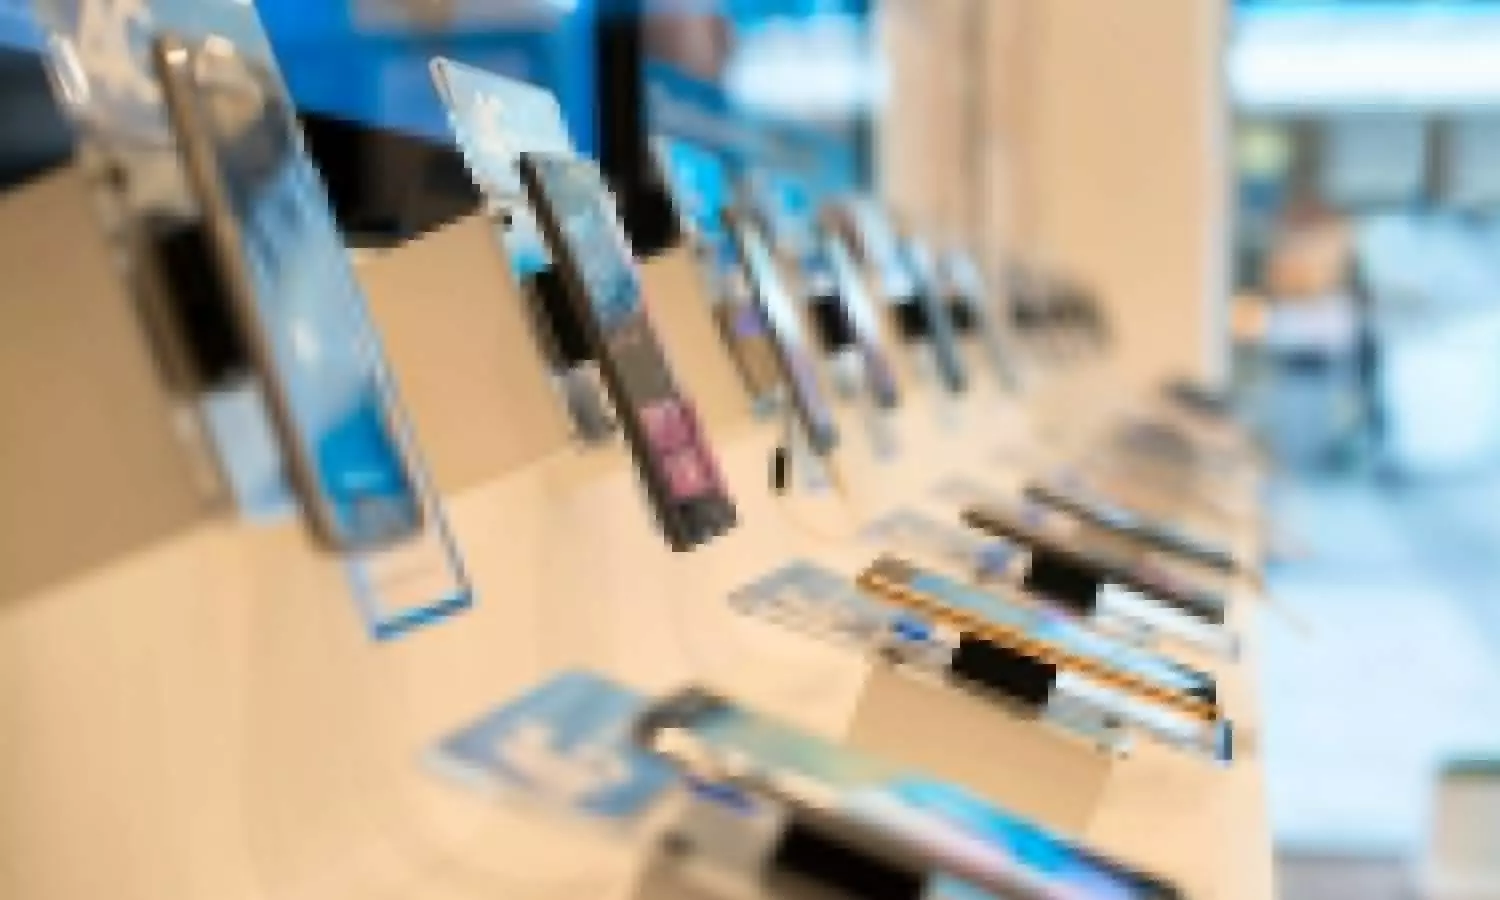 Smartphones in a shelf - Samsung leads in India